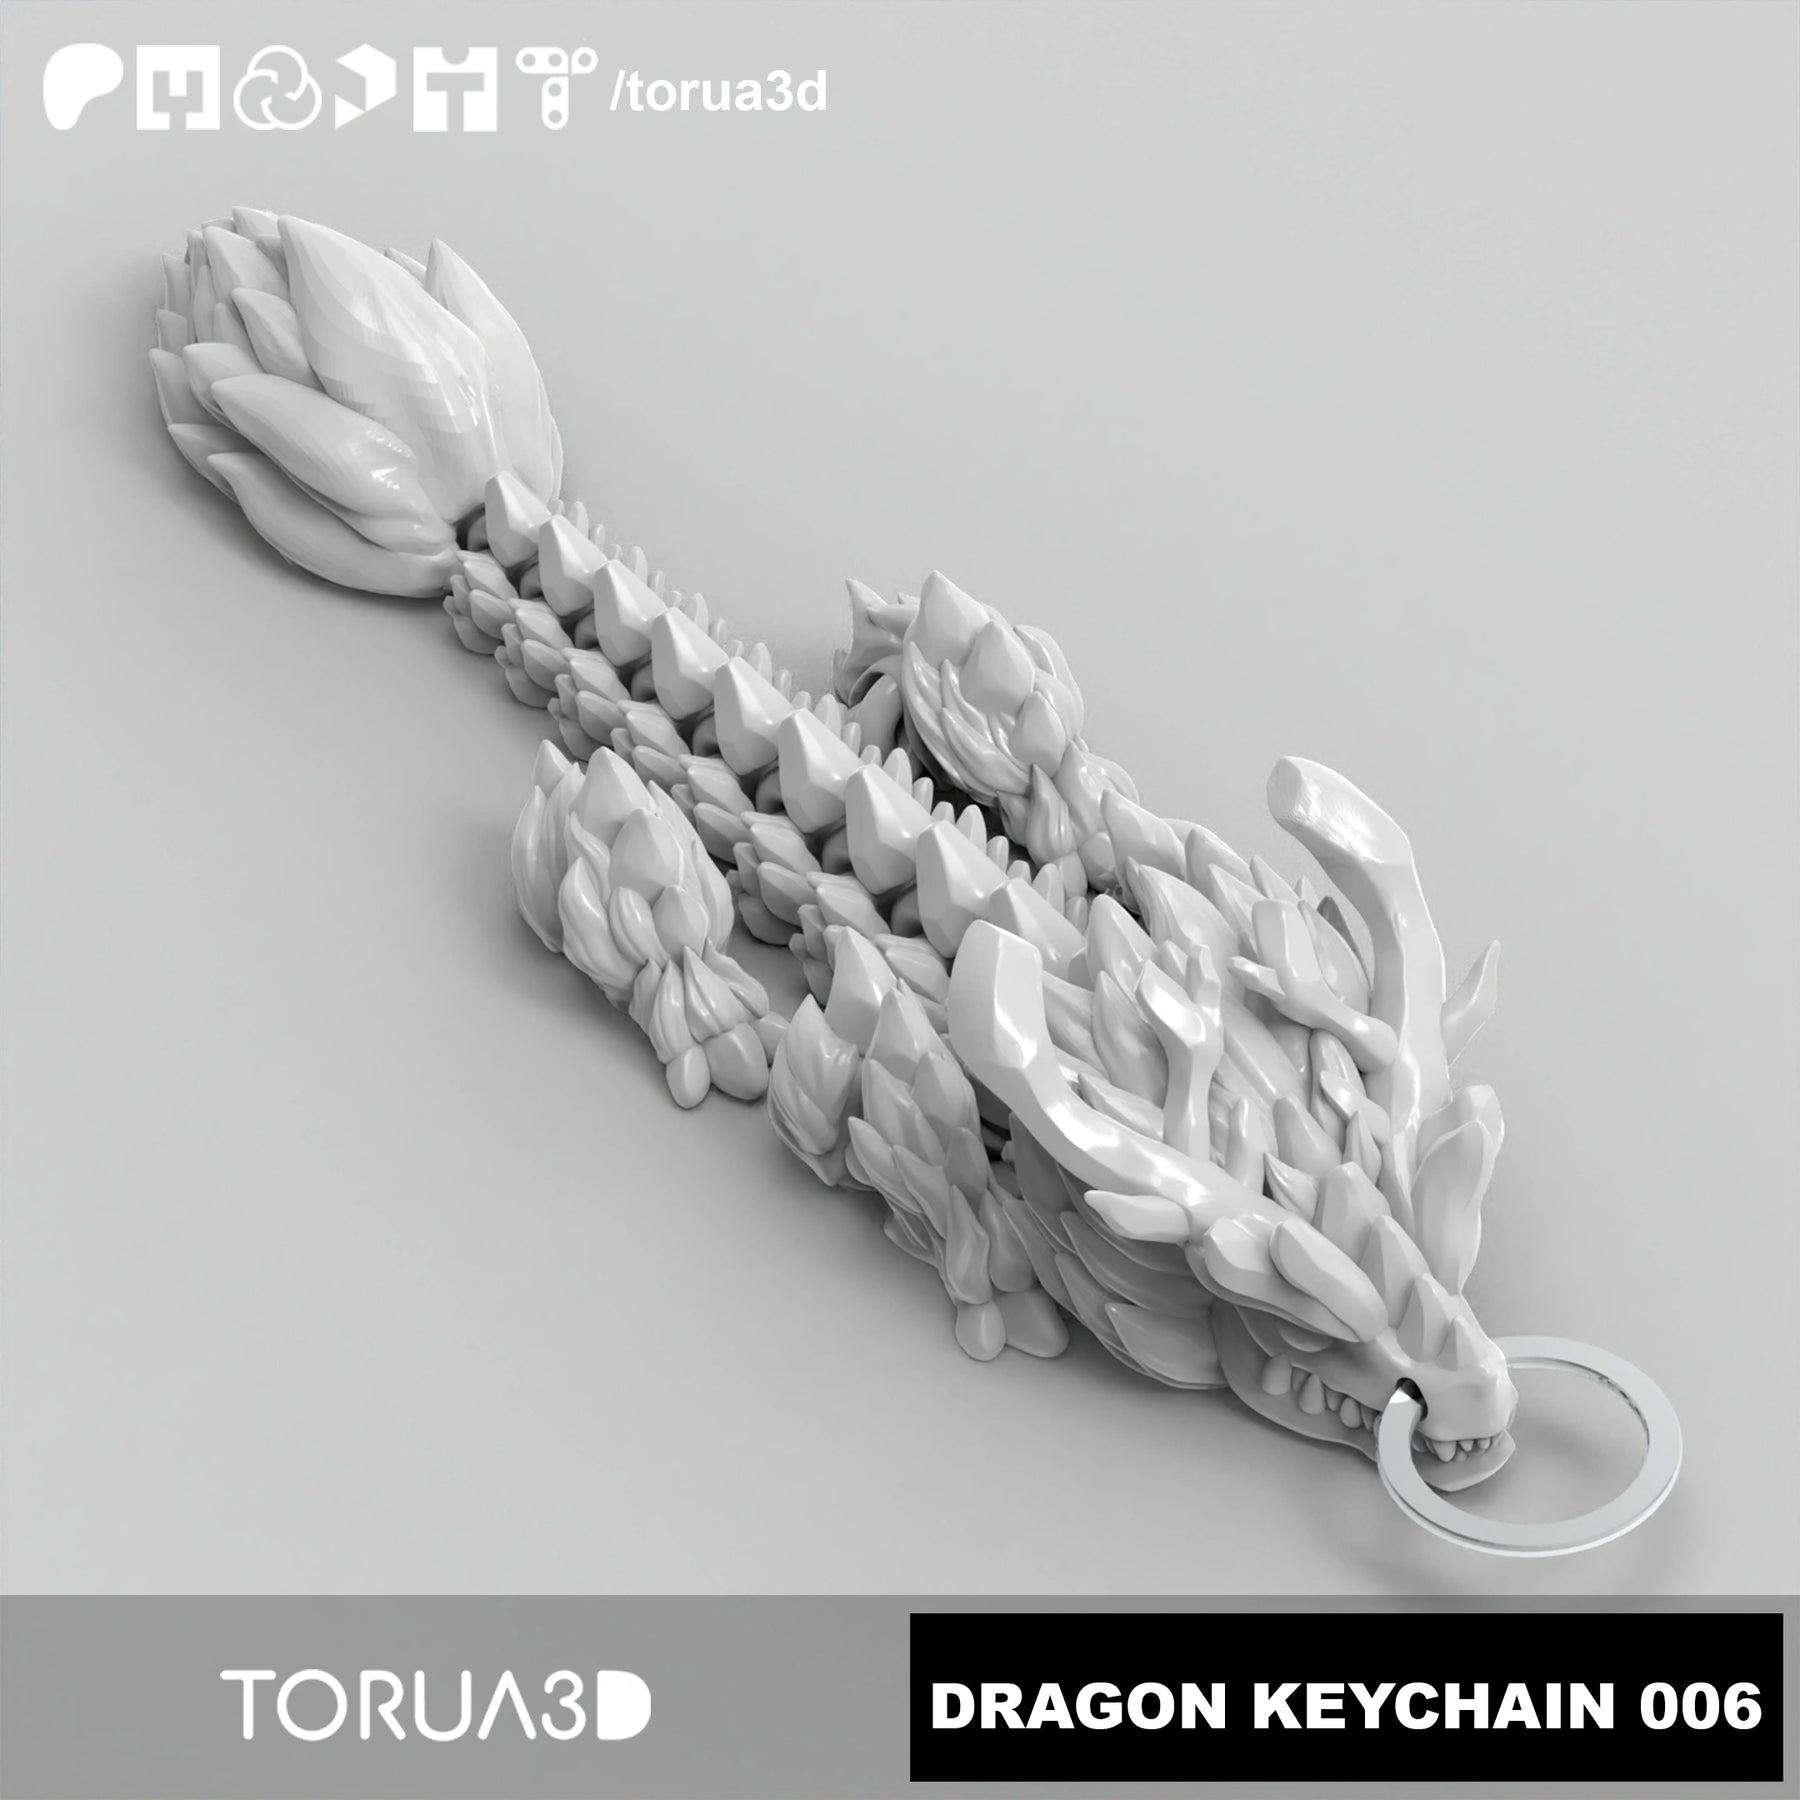 Articulated Dragon Keychain 006